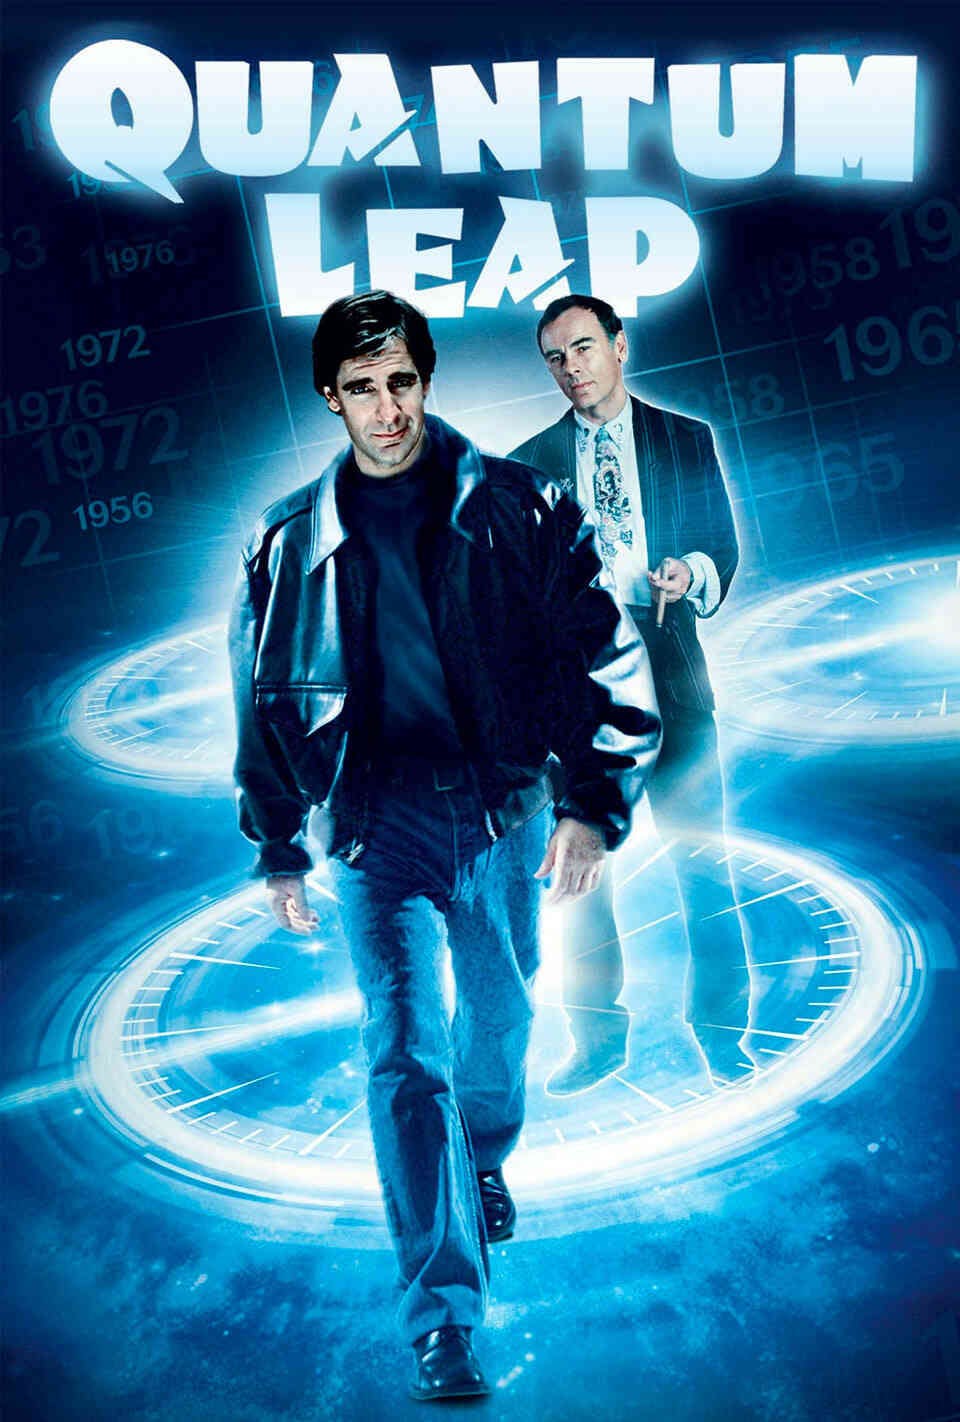 Read Quantum Leap screenplay (poster)